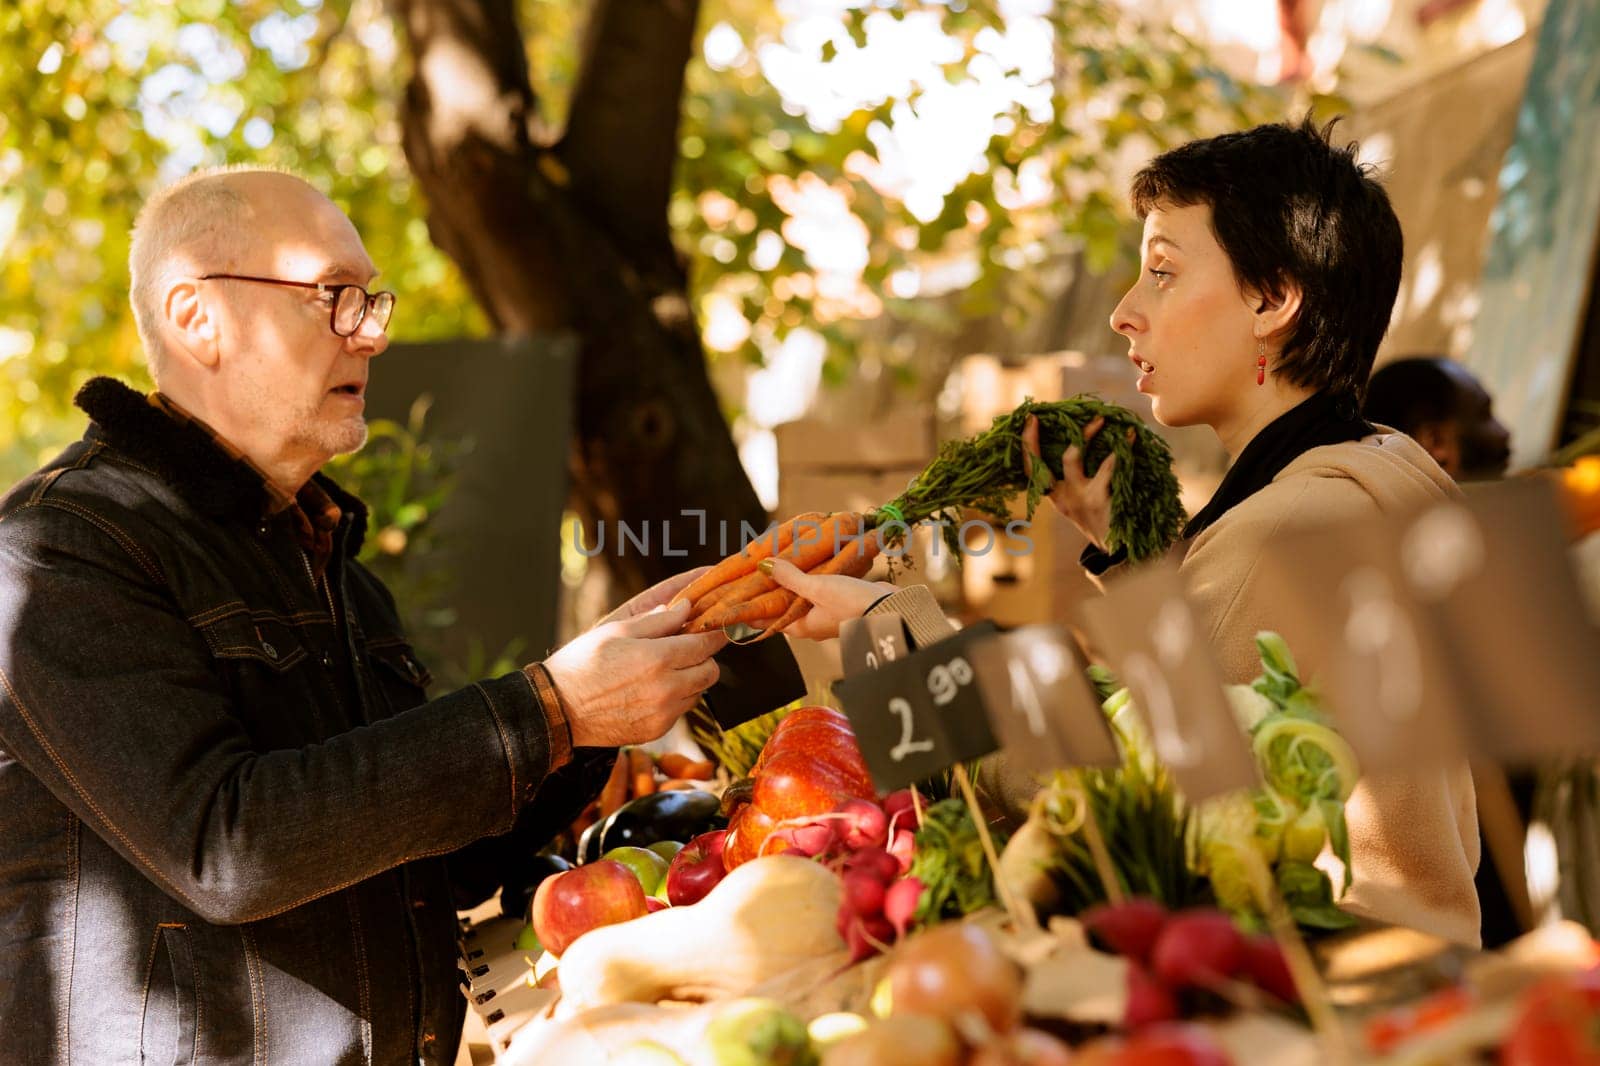 Vendor giving fresh carrots to client by DCStudio